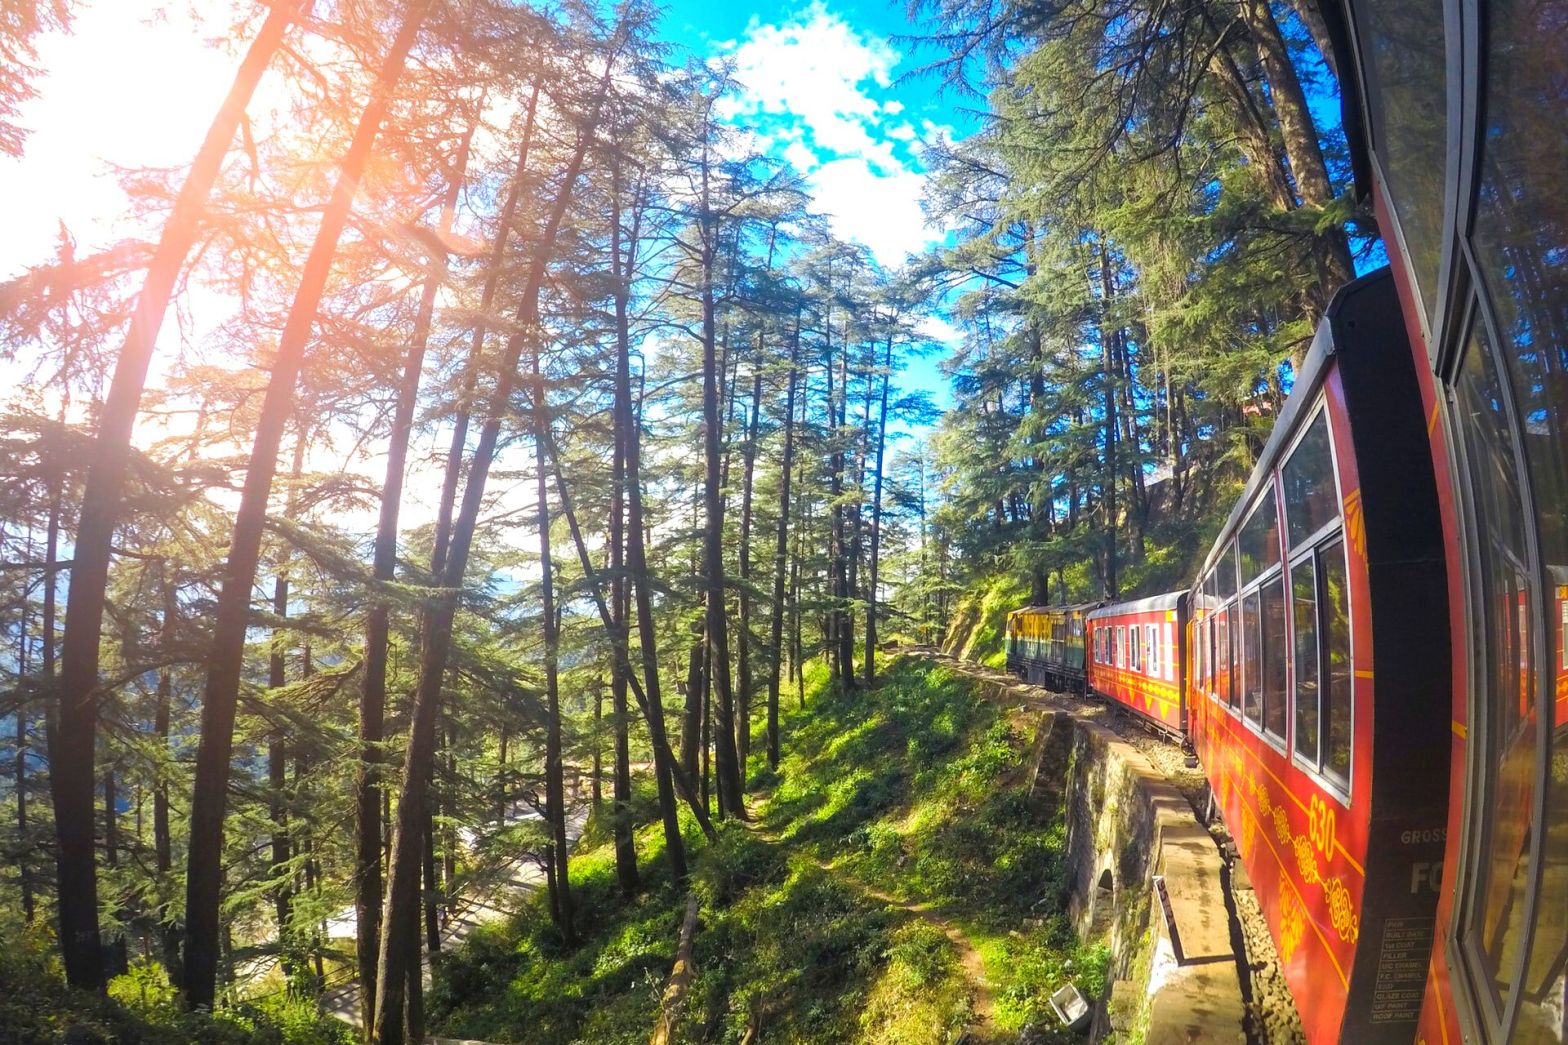 One Day Shimla Sightseeing Trip by Cab